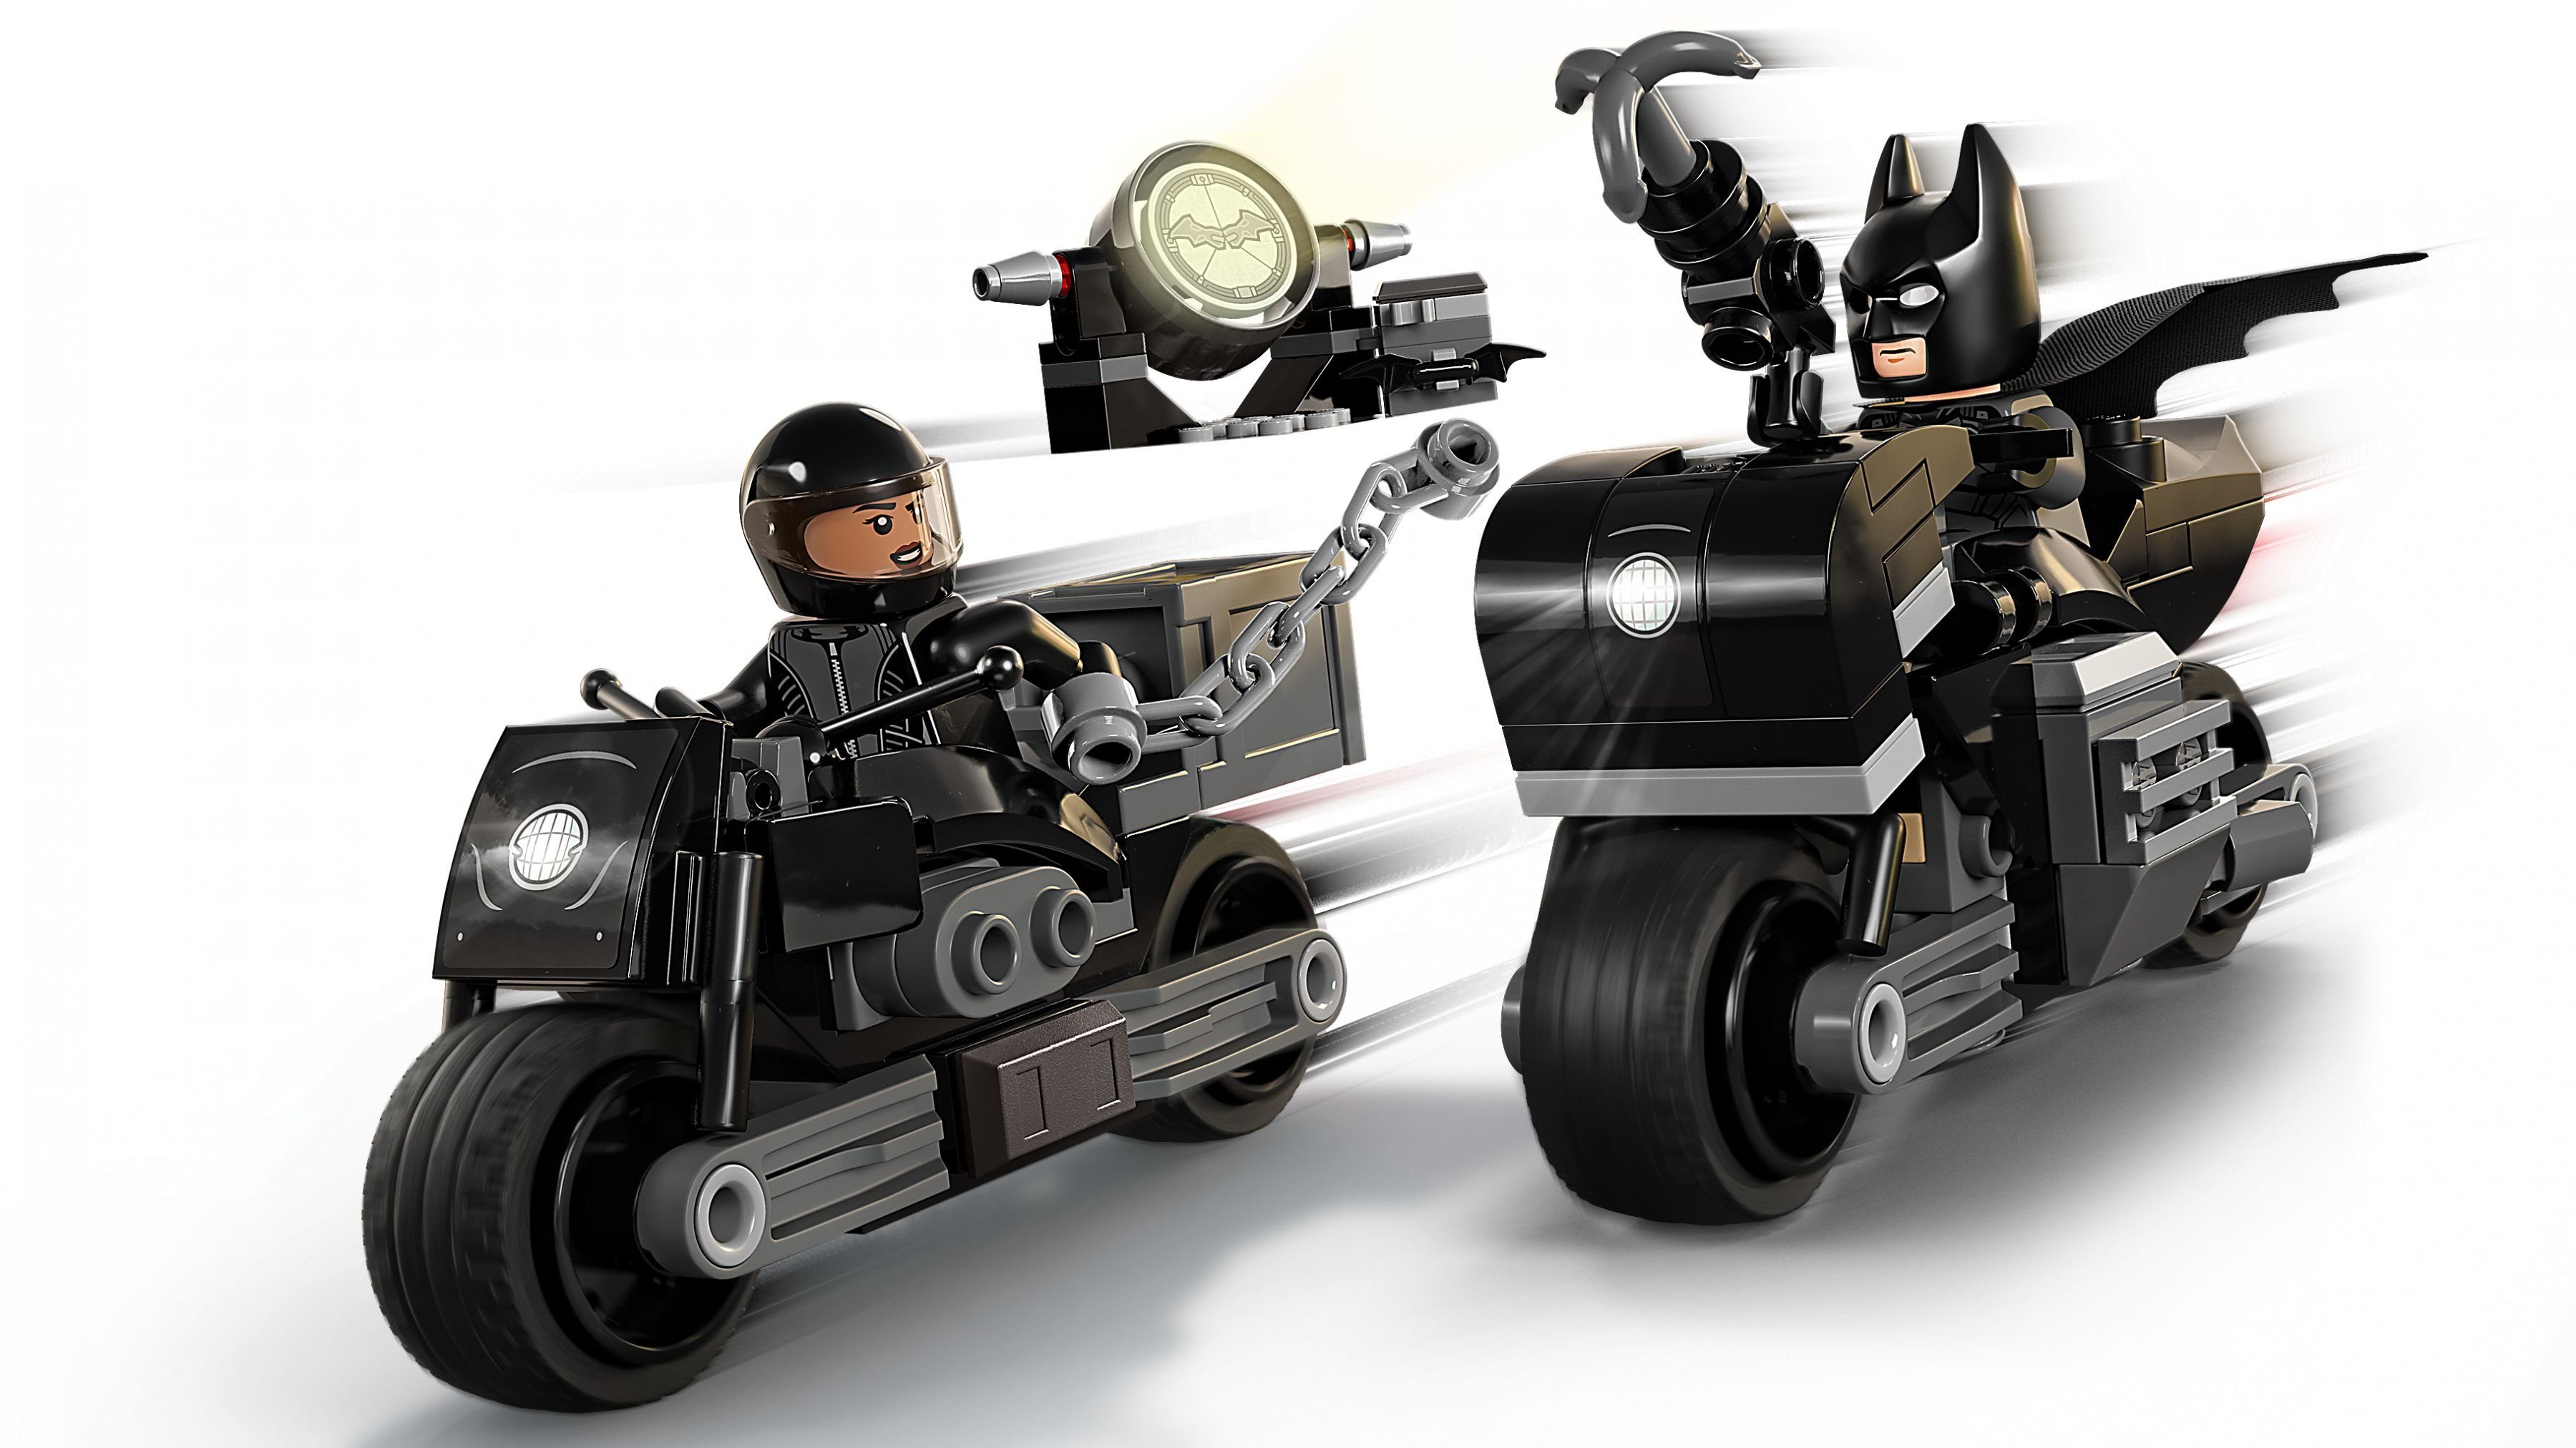 LEGO® Konstruktionsspielsteine LEGO® DC (Set, St) Verfolgungsjagd, Batman™ & 149 - Kyle™: Selina